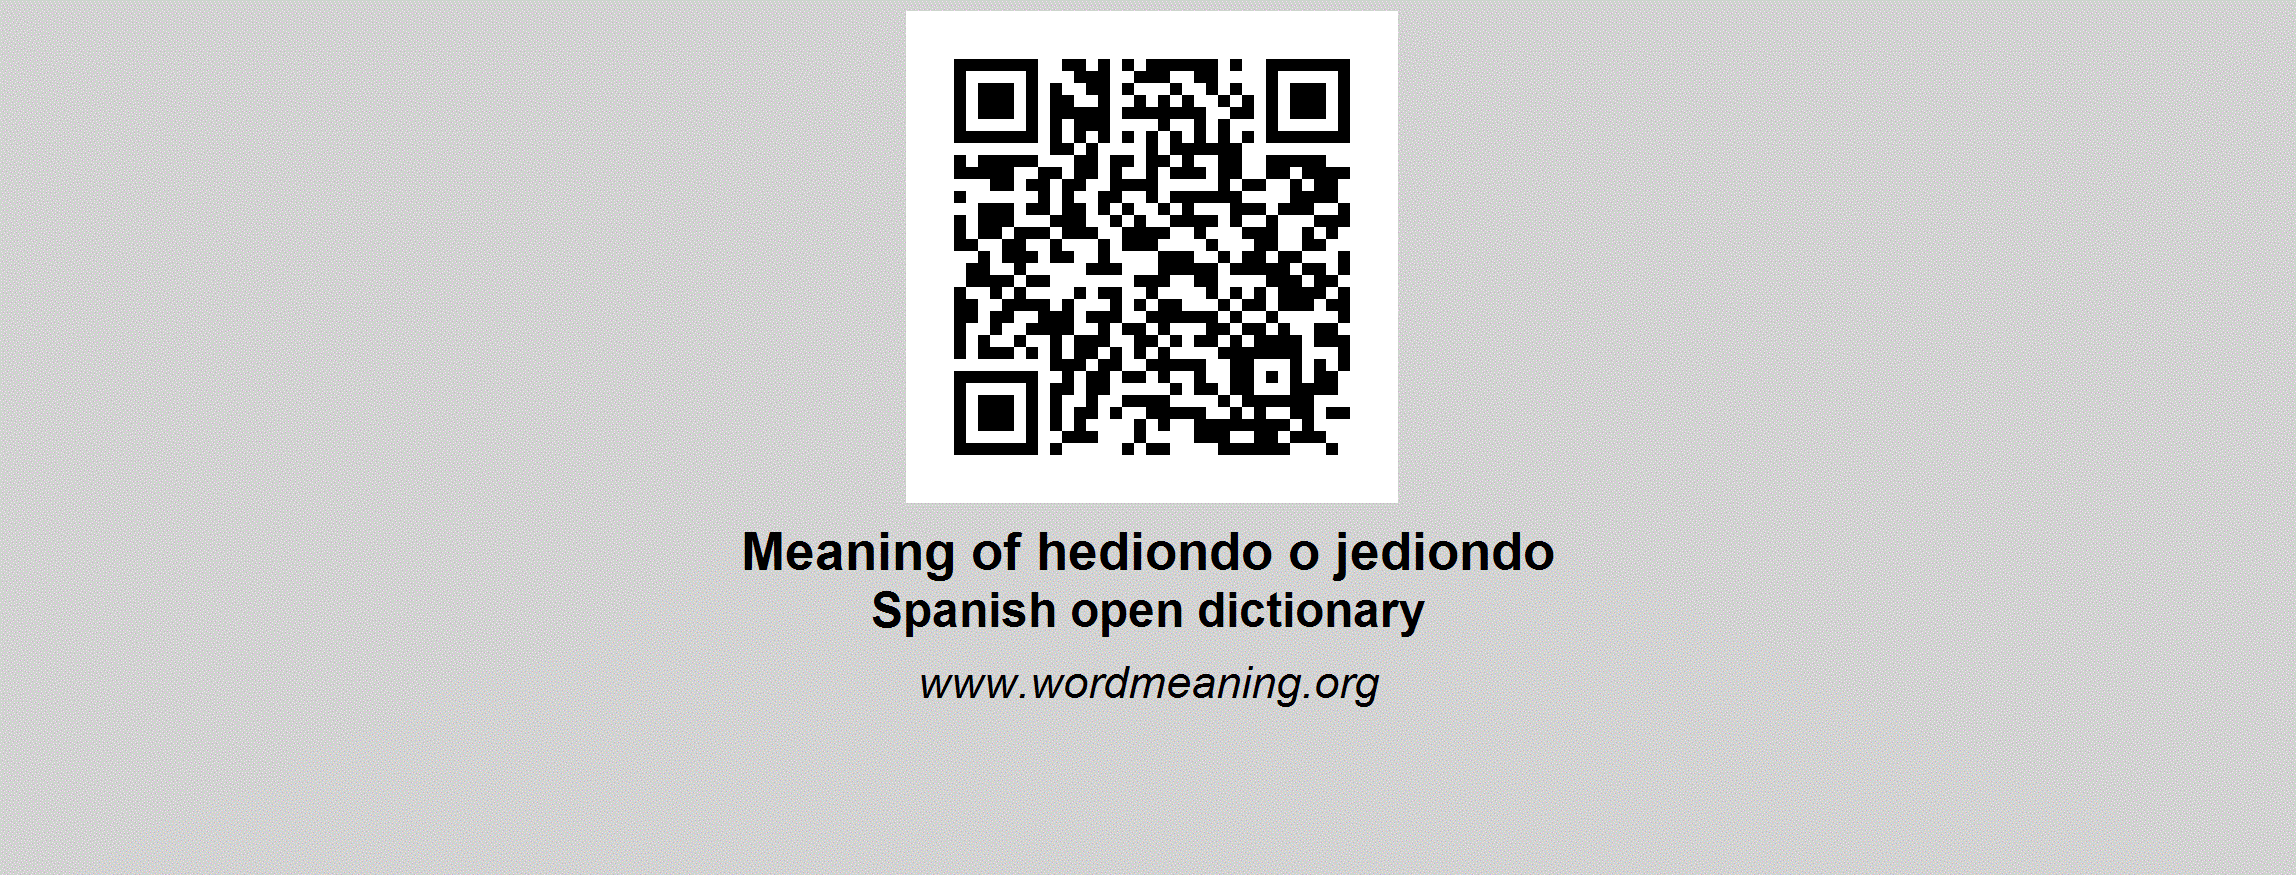 HEDIONDO O JEDIONDO - Spanish open dictionary